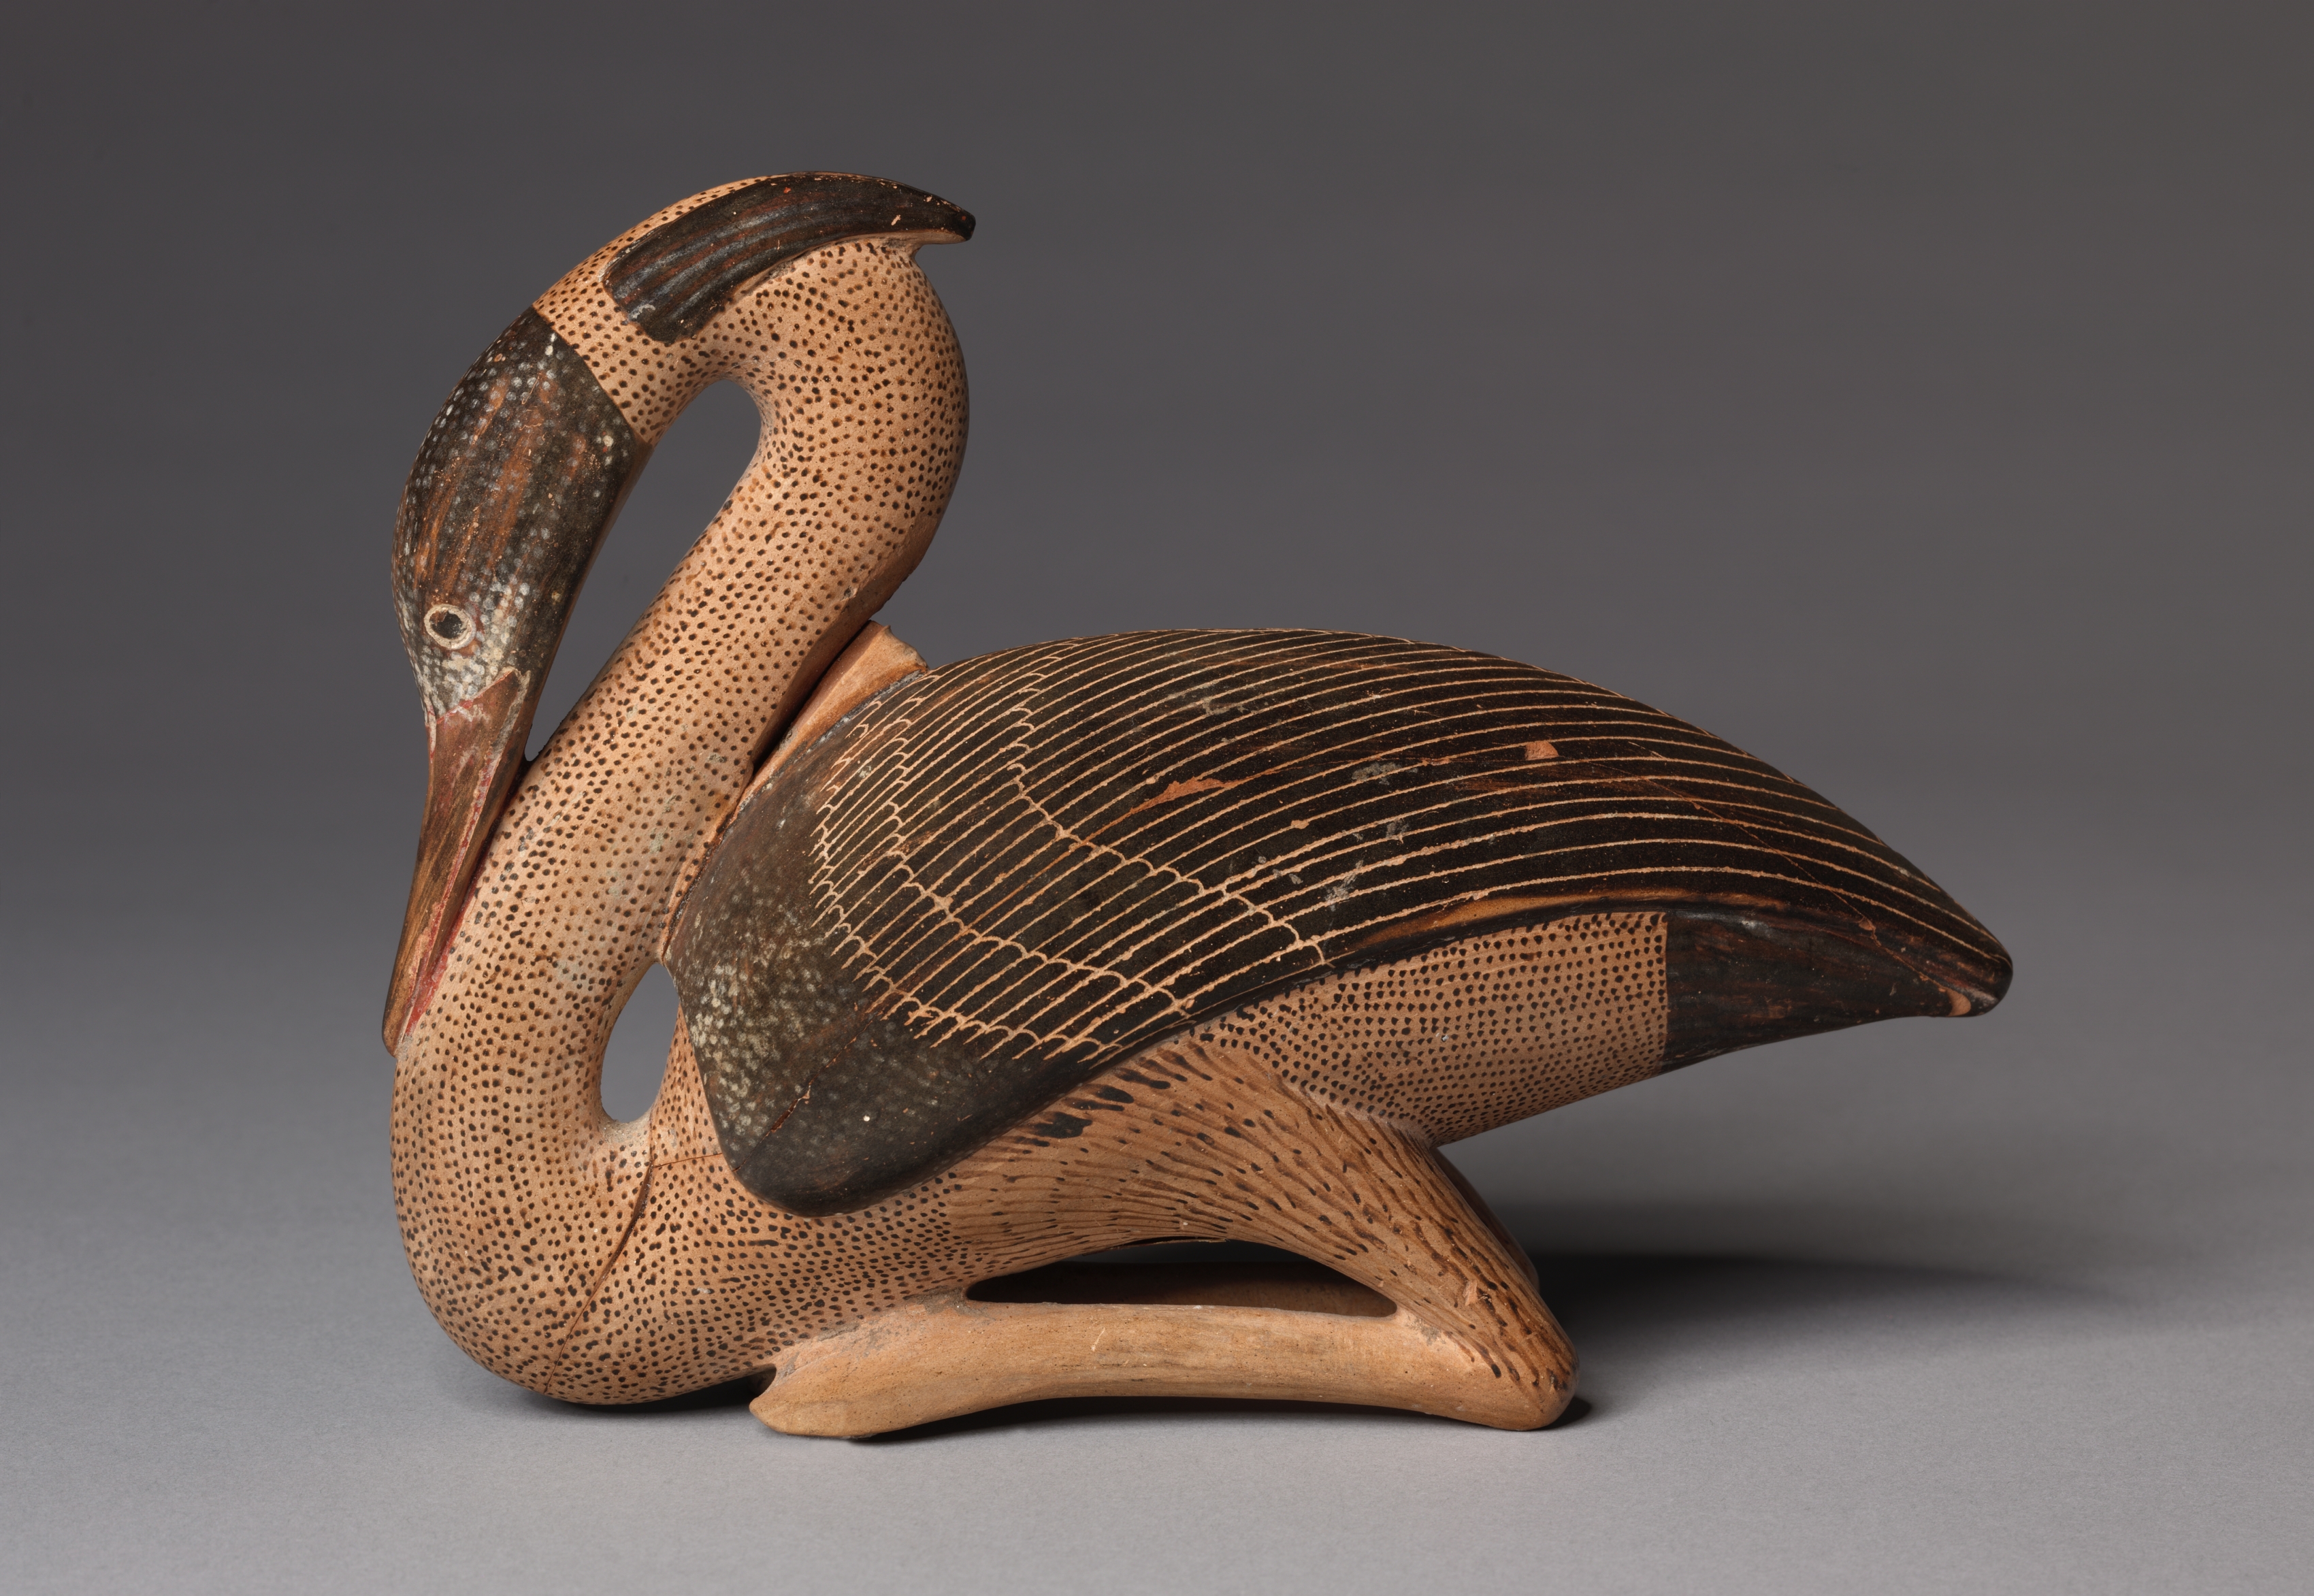 Heron-Shaped Figure Vase (Oil Vessel)